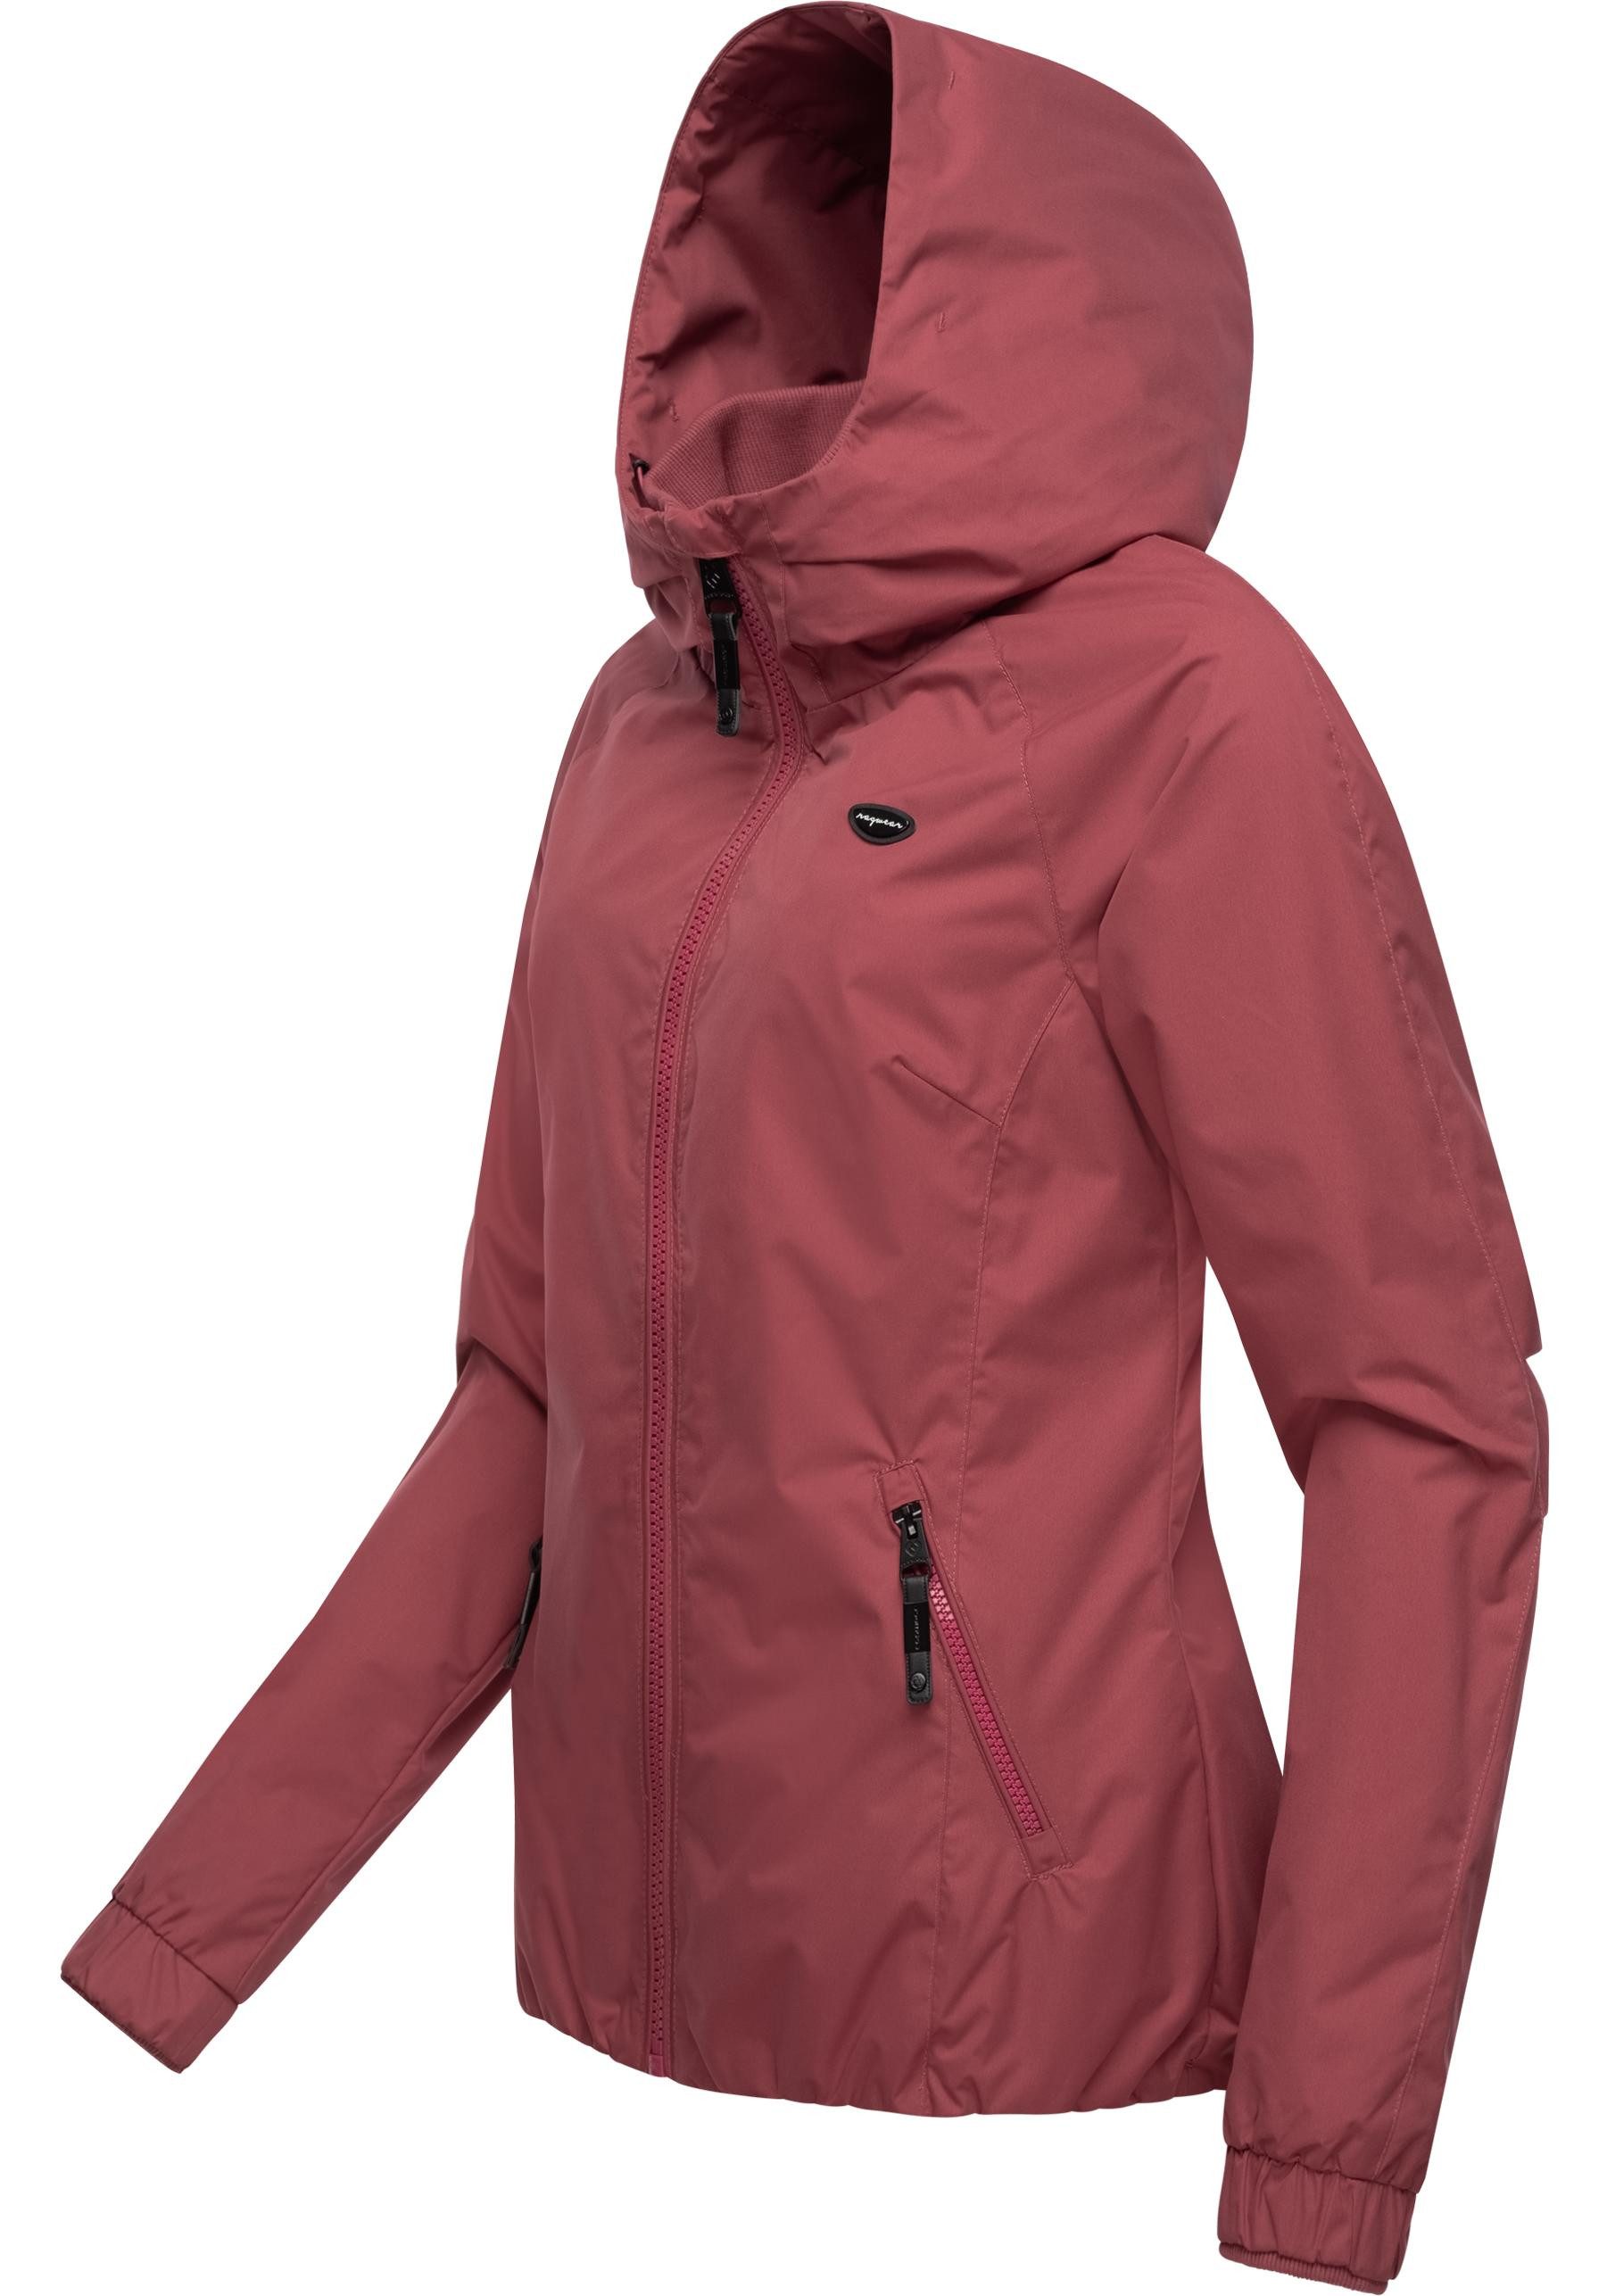 Outdoorjacke stylische großer Übergangsjacke Kapuze rosa Dizzie Ragwear mit